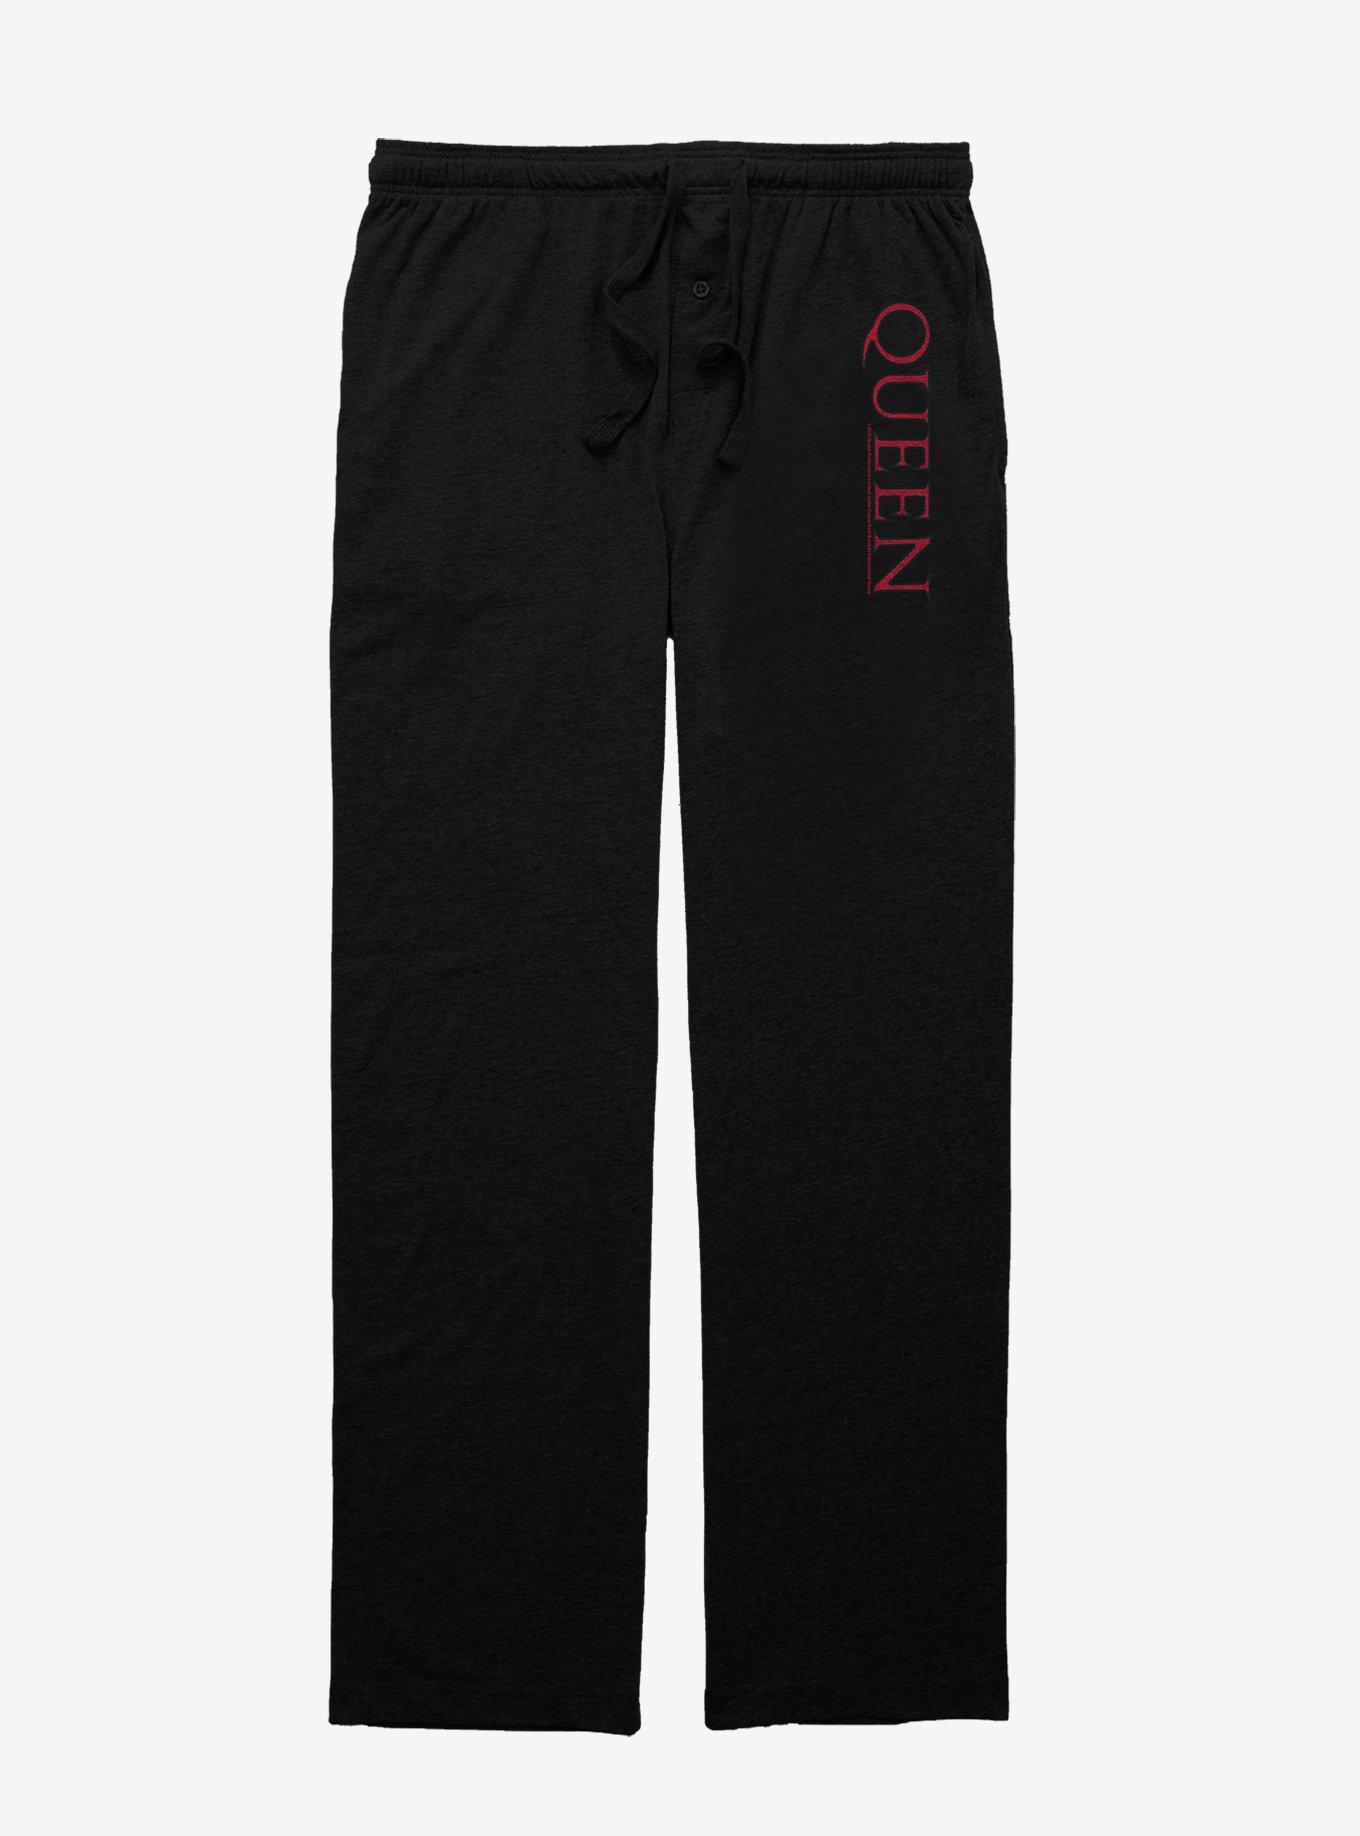 Queen Band Logo Pajama Pants, BLACK, hi-res